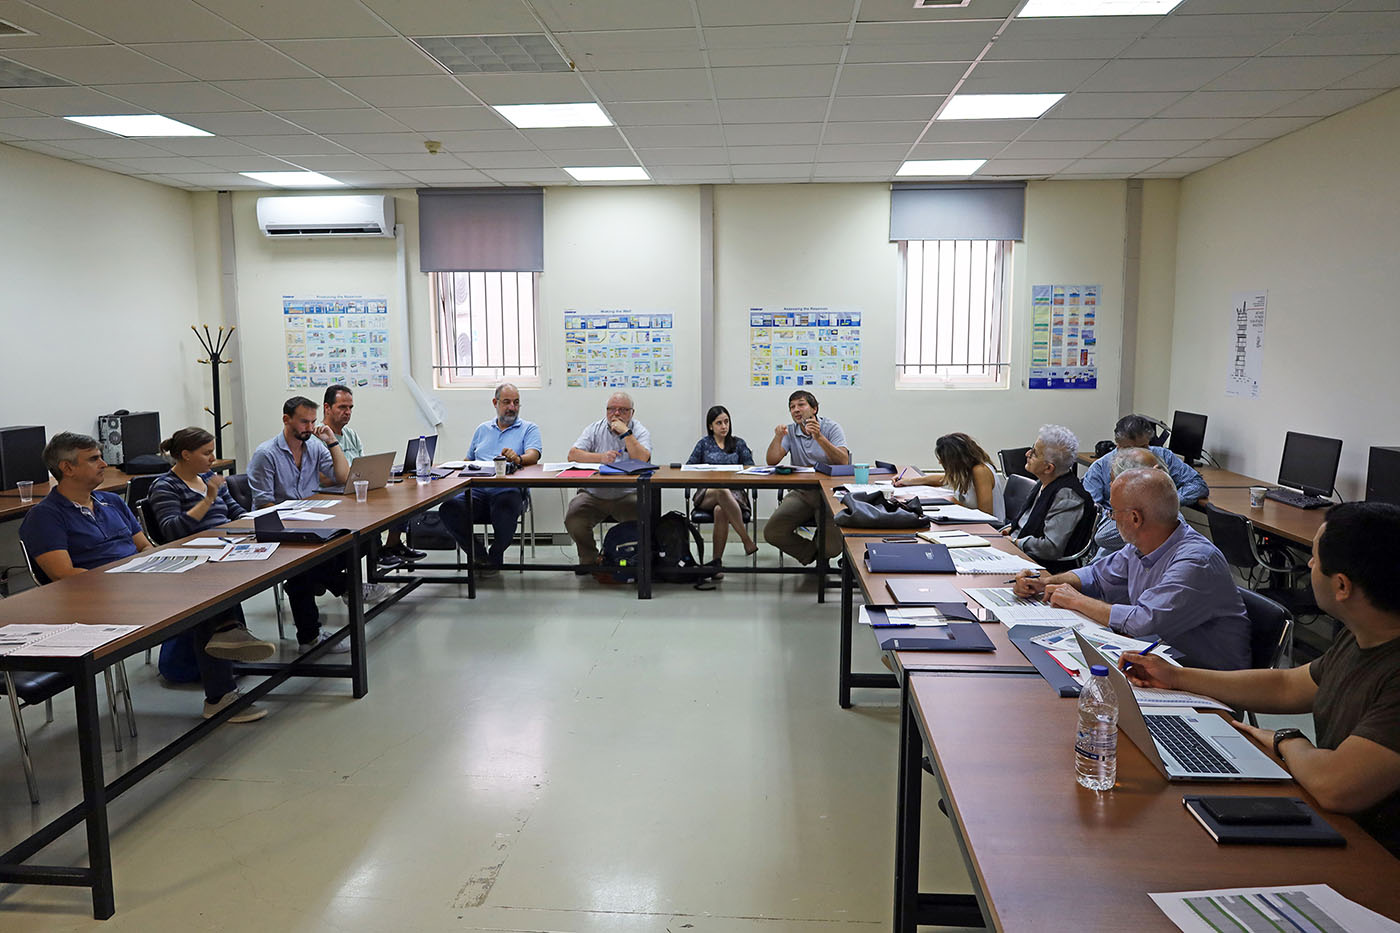 TWINN2SET: The Kick-Off meeting in Chania, Crete